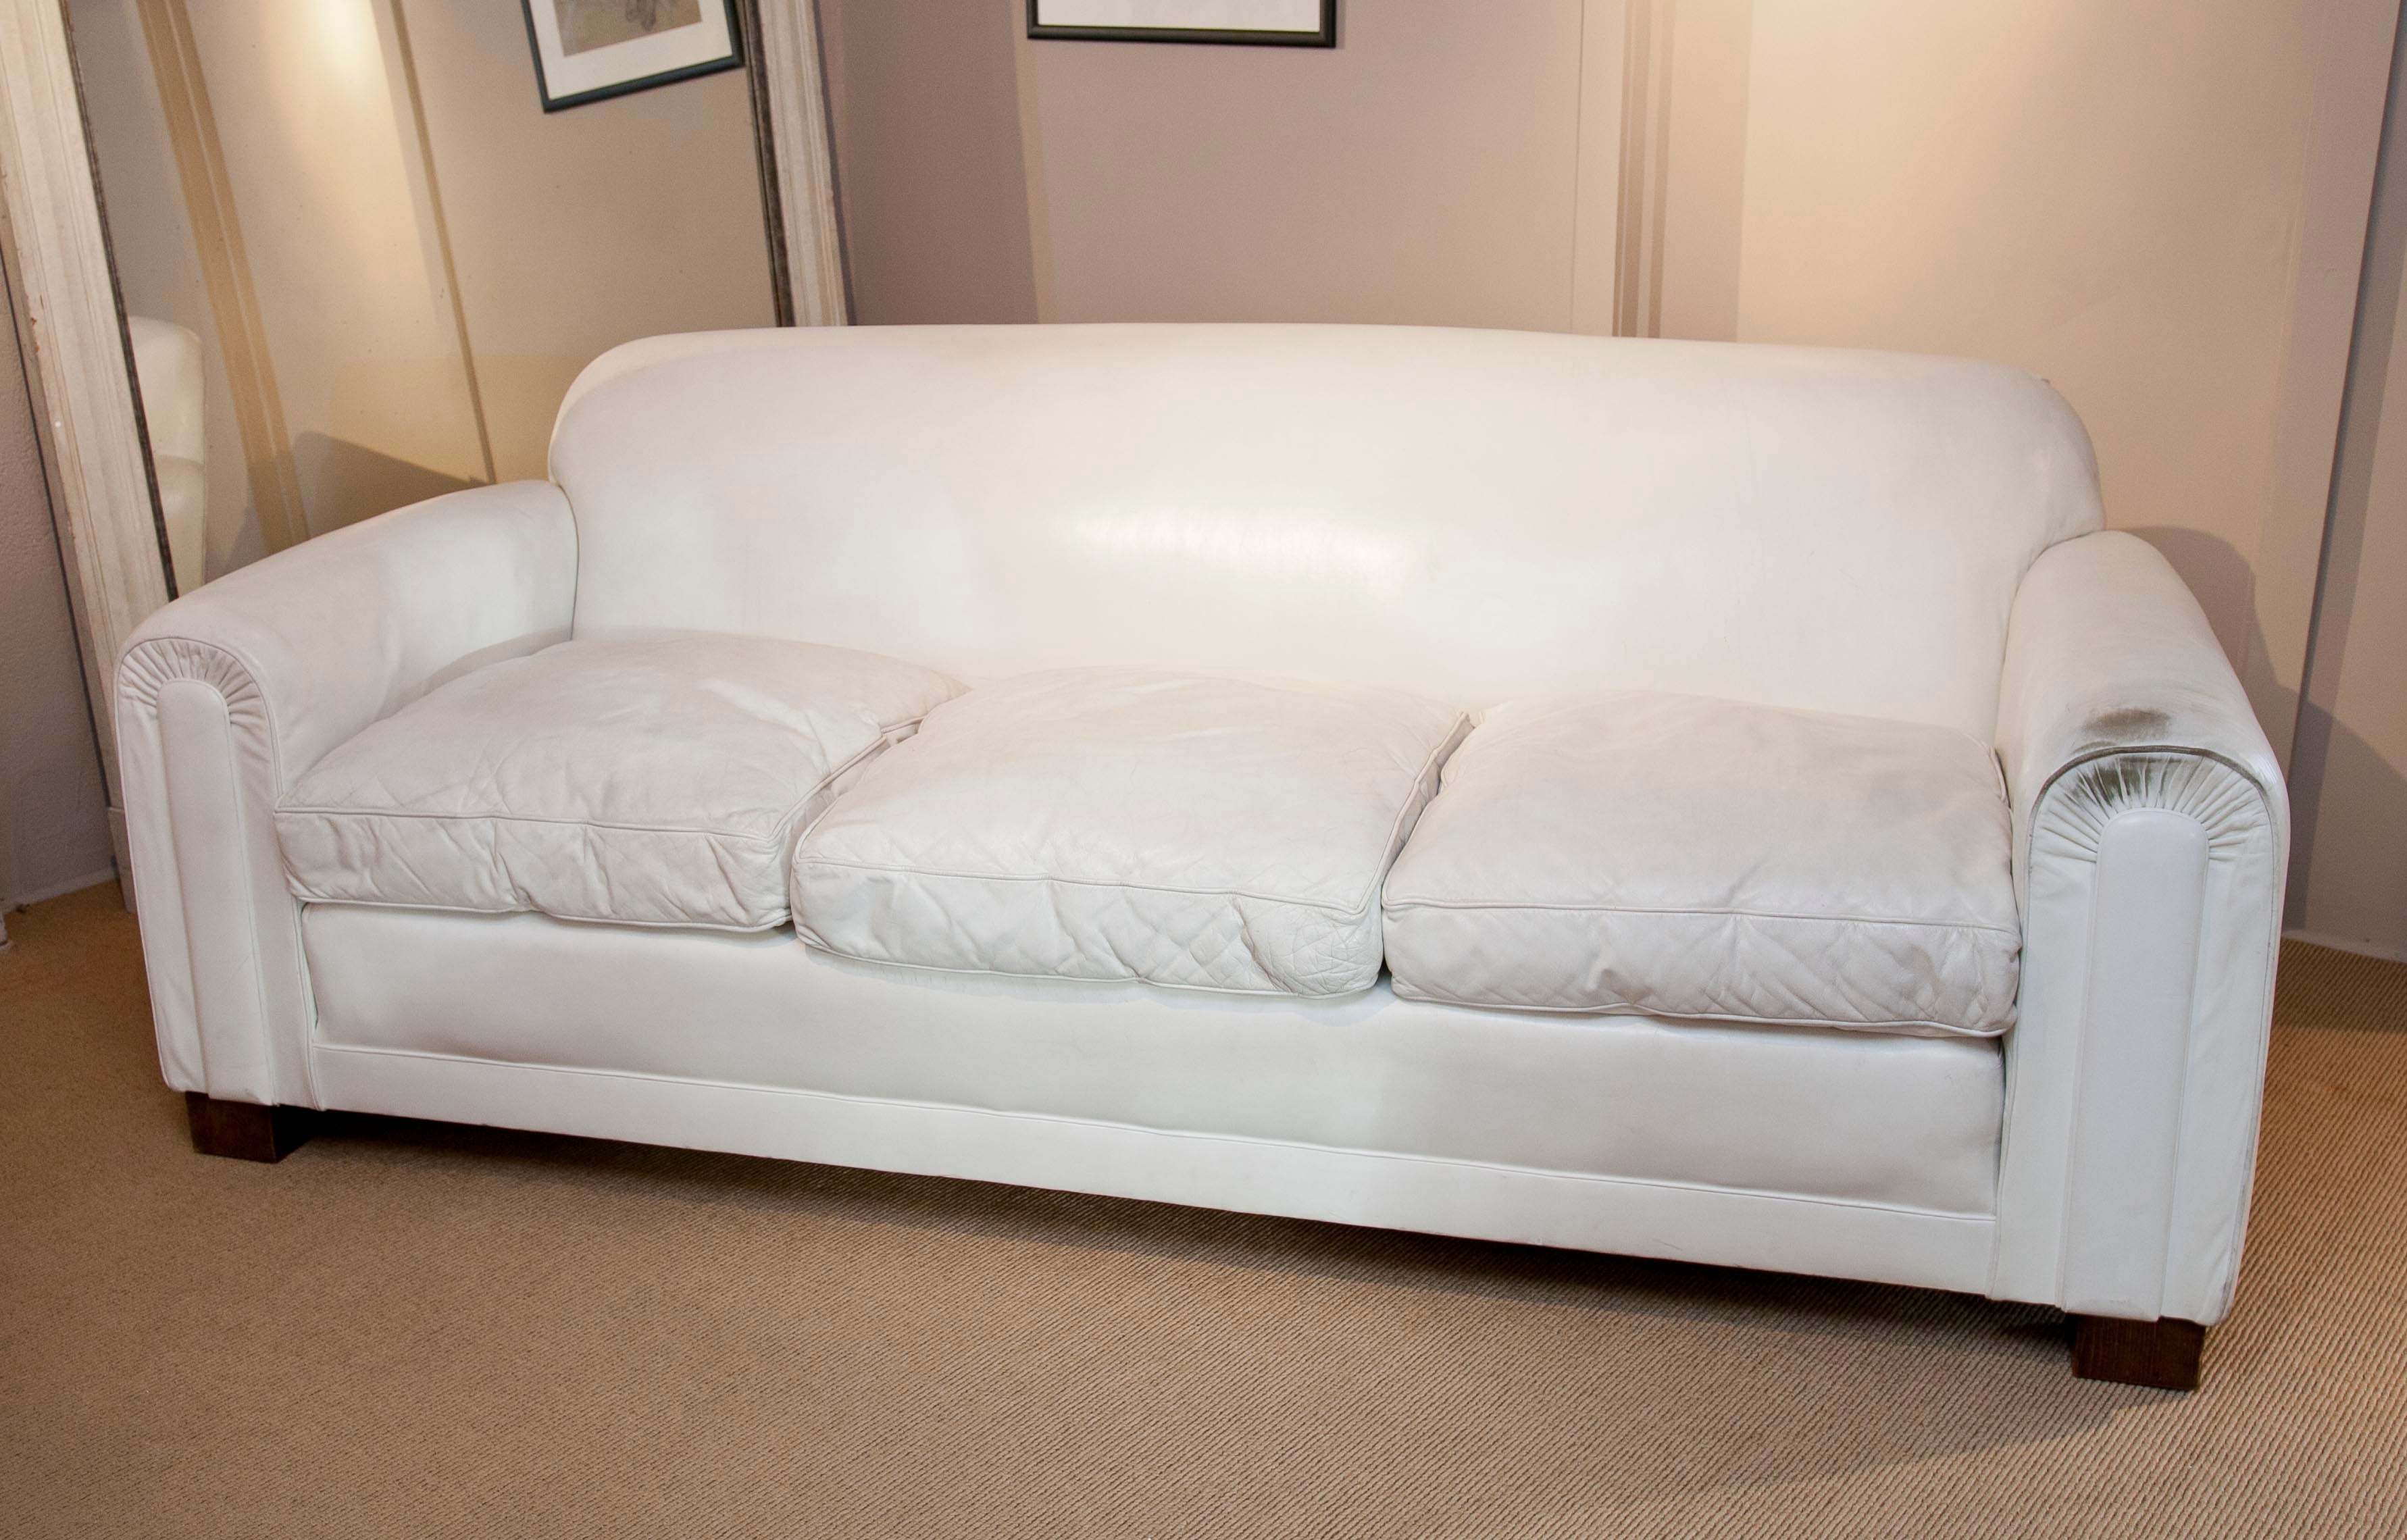 Deco-style White Leather Sofa